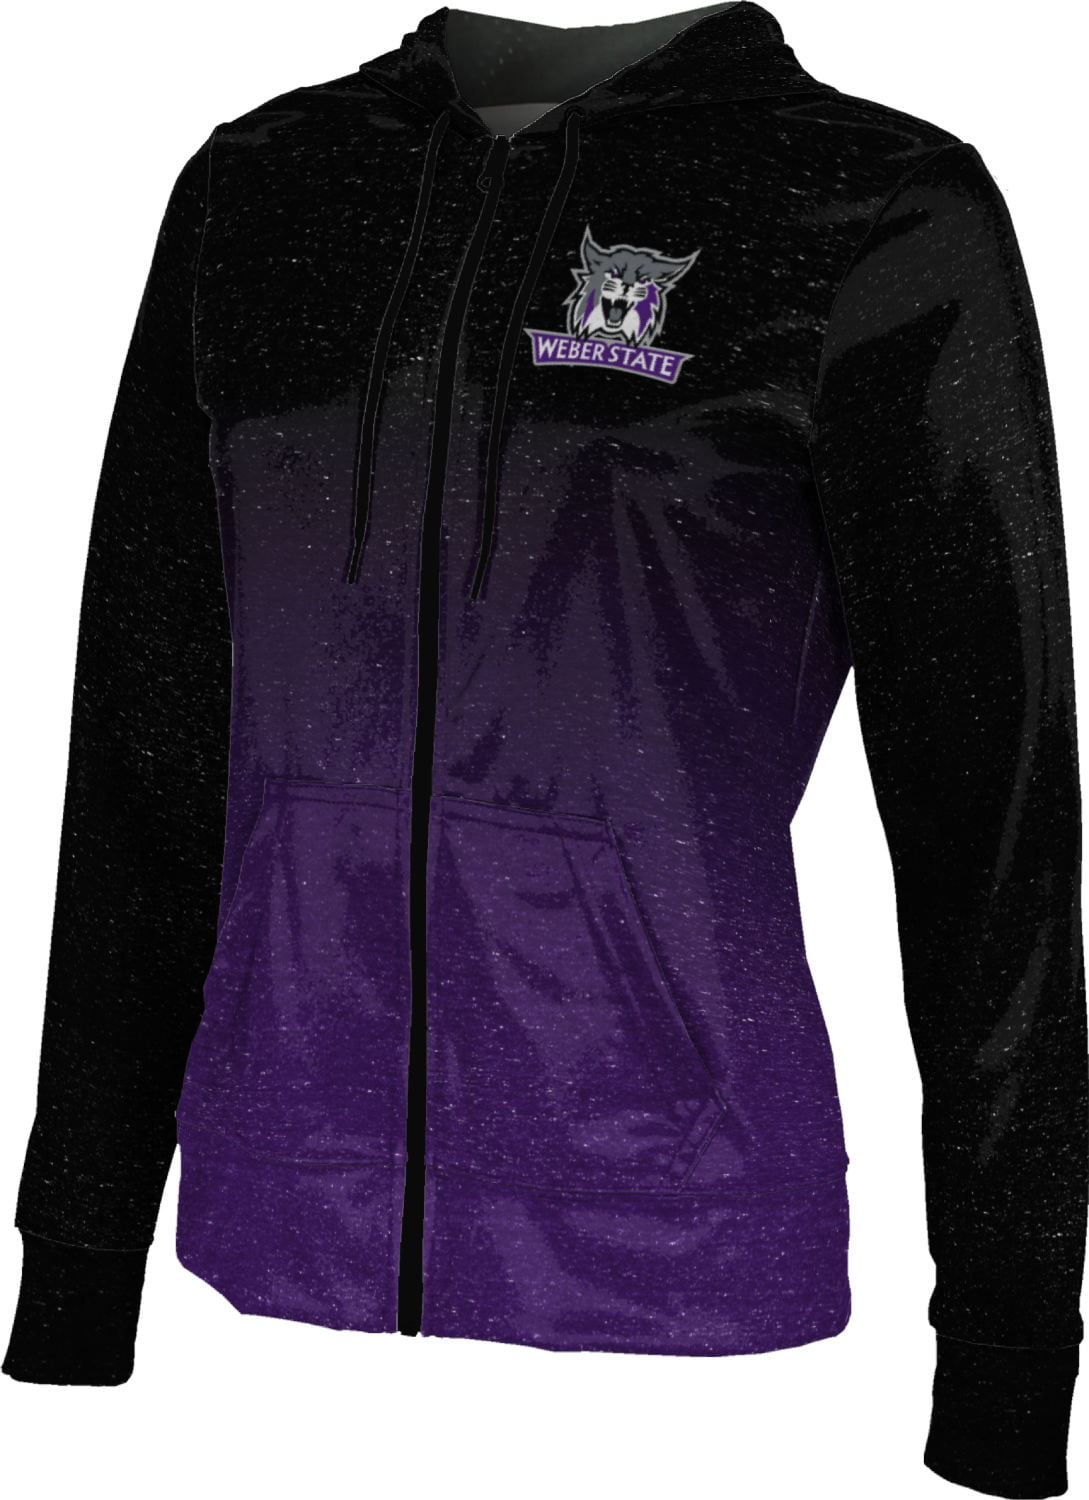 School Spirit Sweatshirt Ohio Wesleyan University College Girls' Zipper Hoodie Gameday